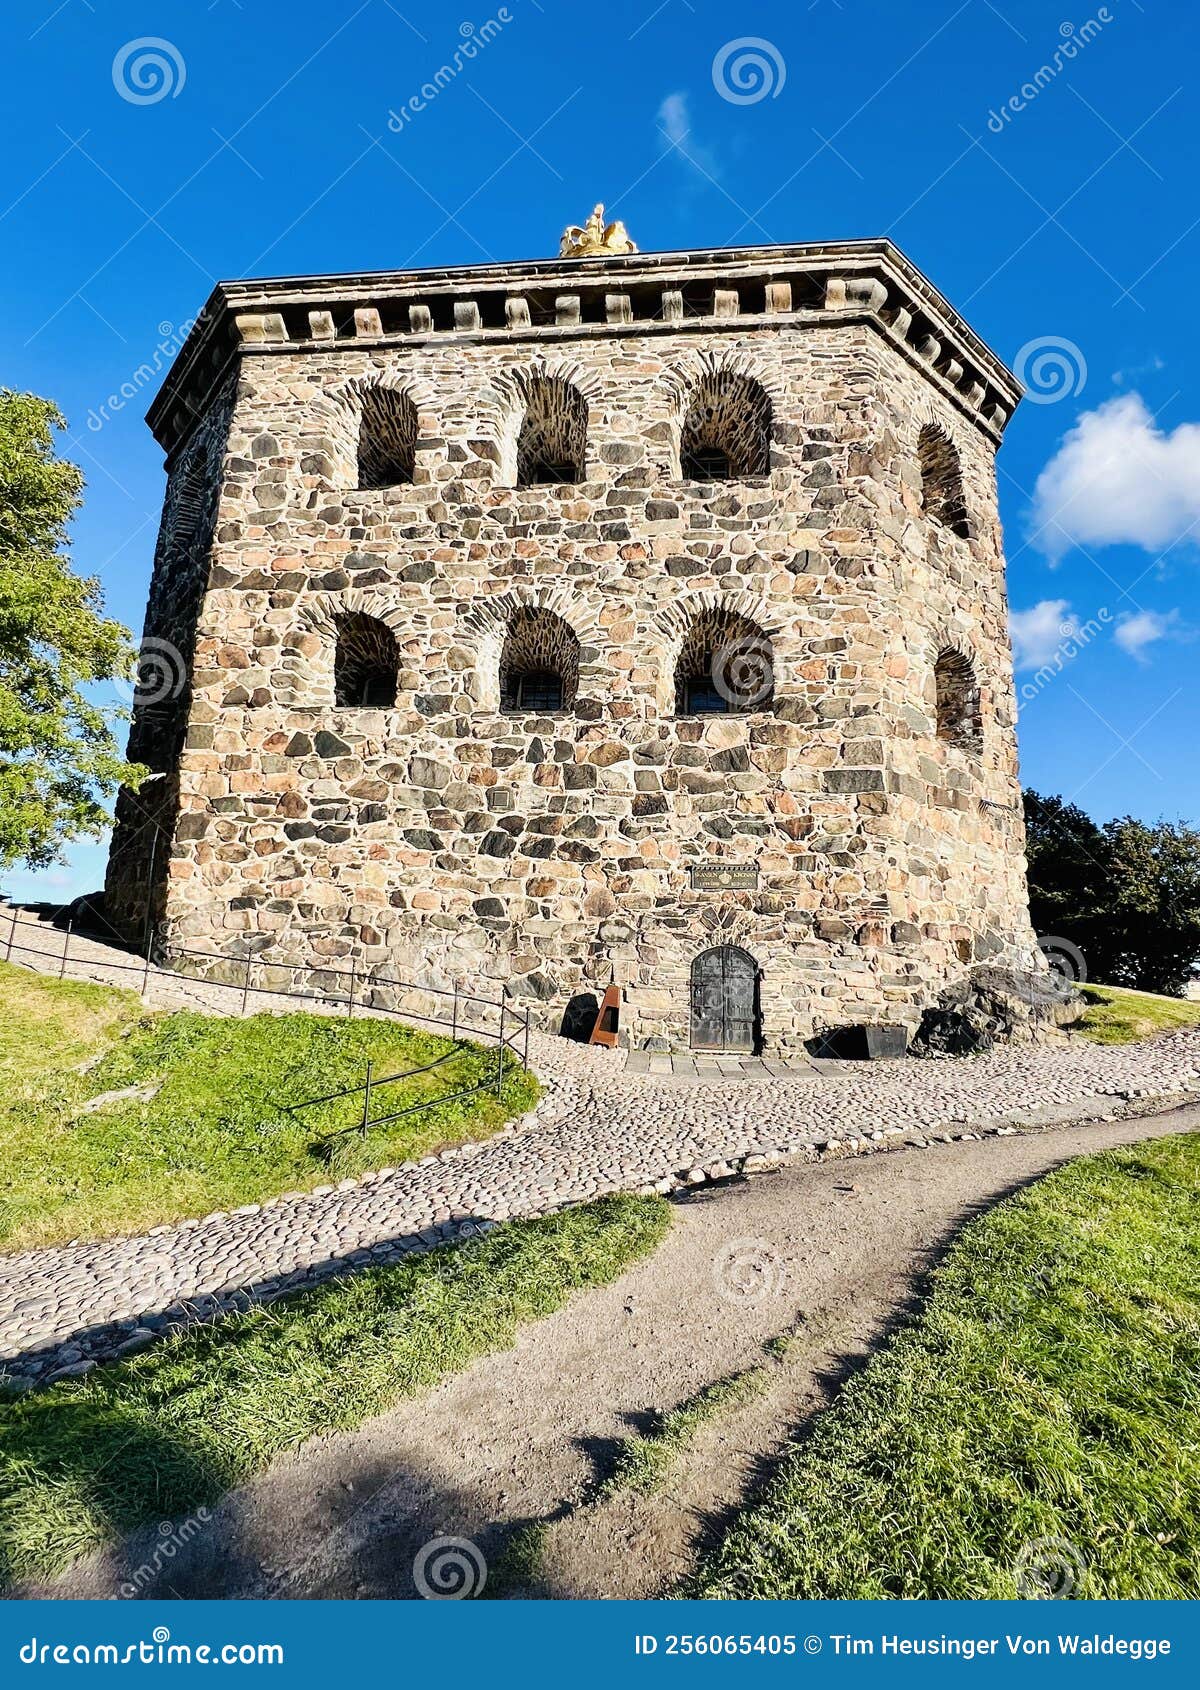 skansen kronan, a fortification on risÃ¥sberget in today's gothenburg district of haga